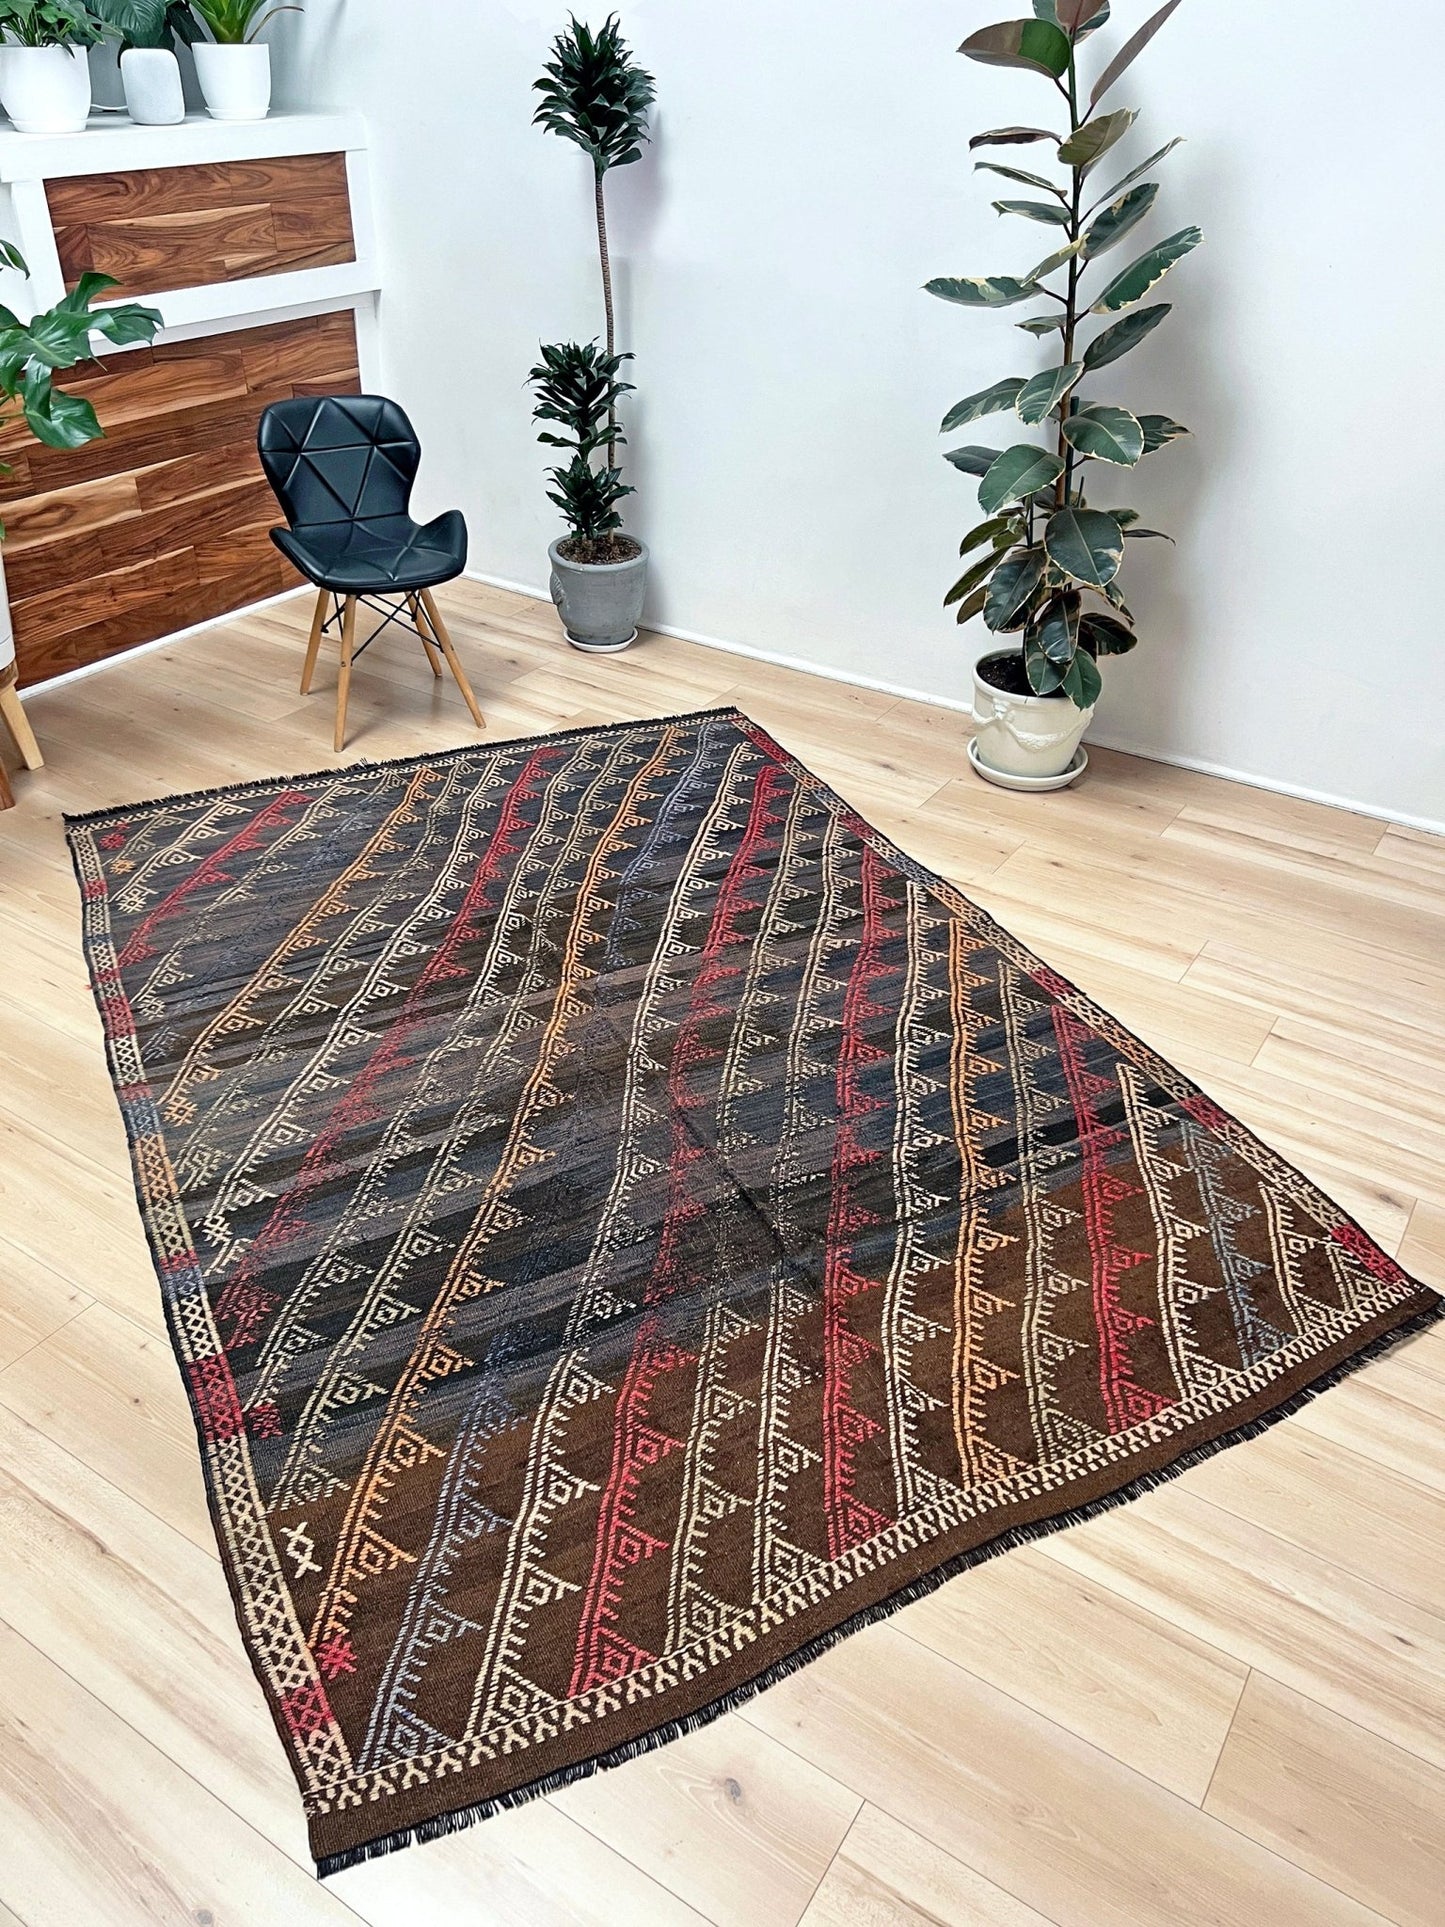 Vibrant kilim rug in living room setting. Distressed vintage turkish kilim rug shop. Flatweave rug Handmade rug shop SF bay area. Oriental rug shop palo alro. 